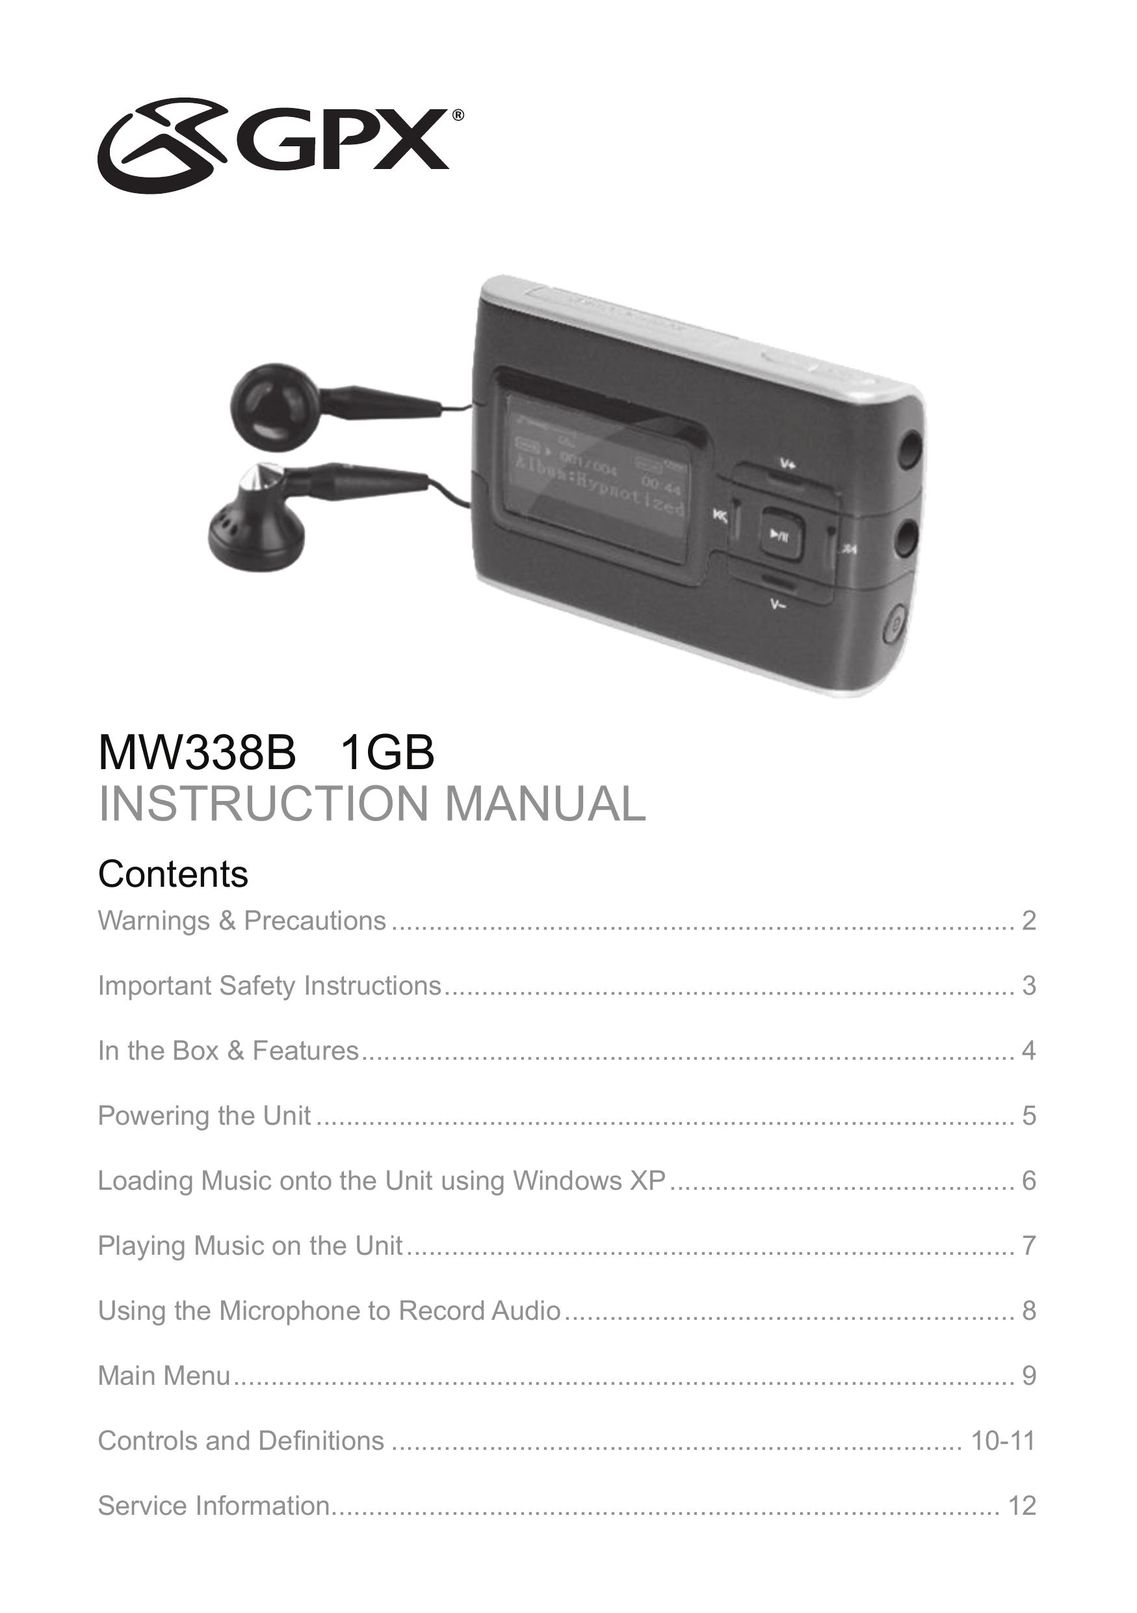 GPX MW338B MP3 Player User Manual